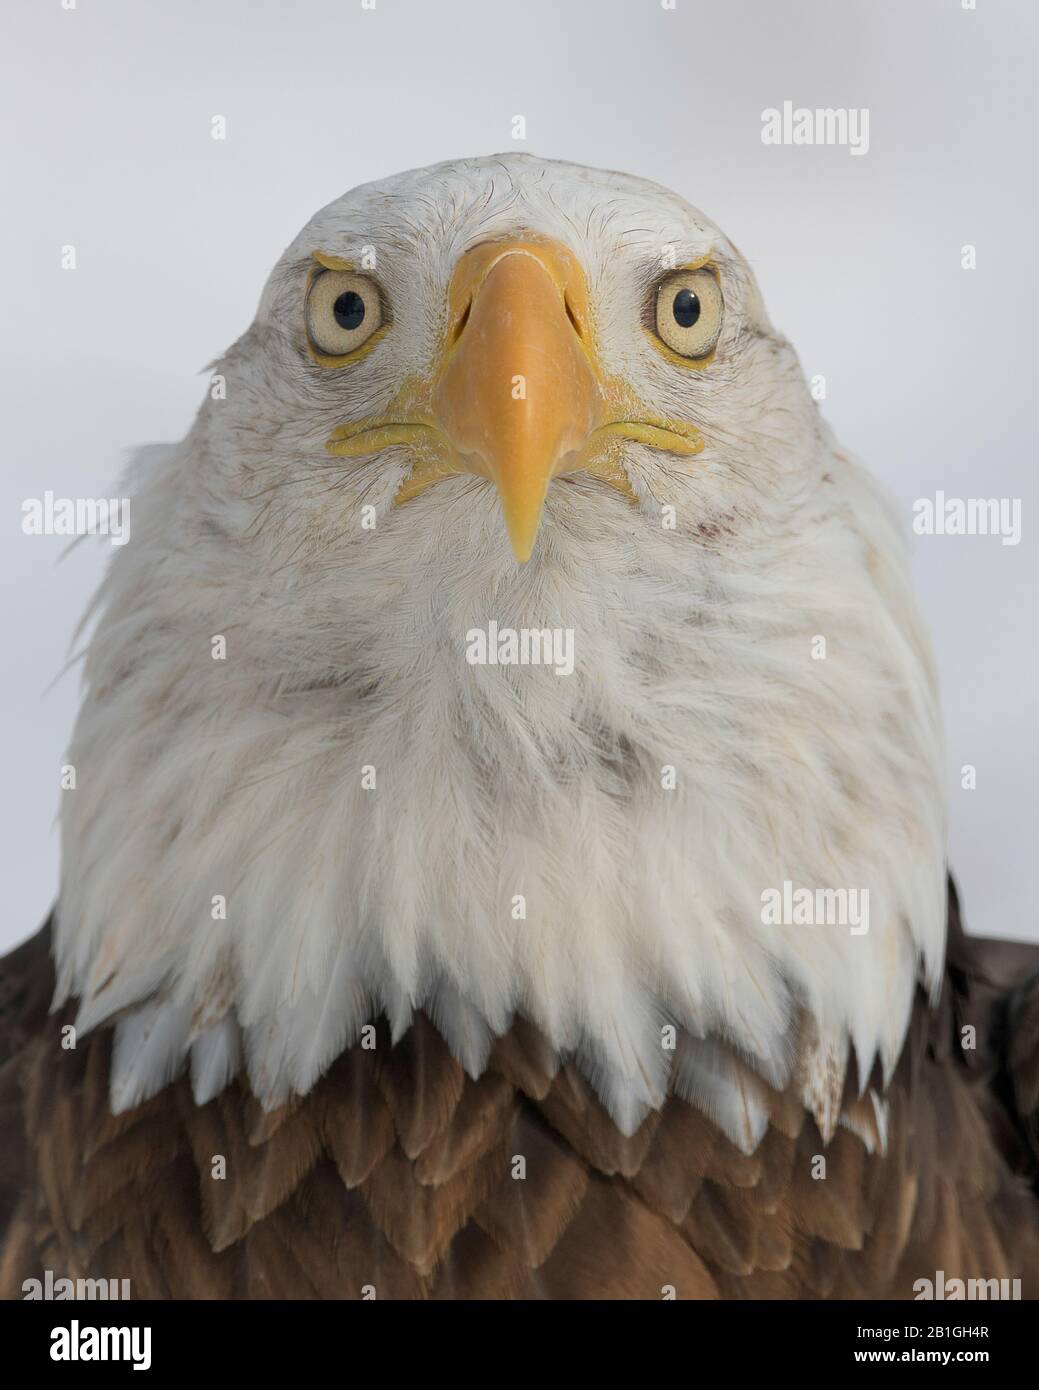 American bald eagle closeup portrait Stock Photo